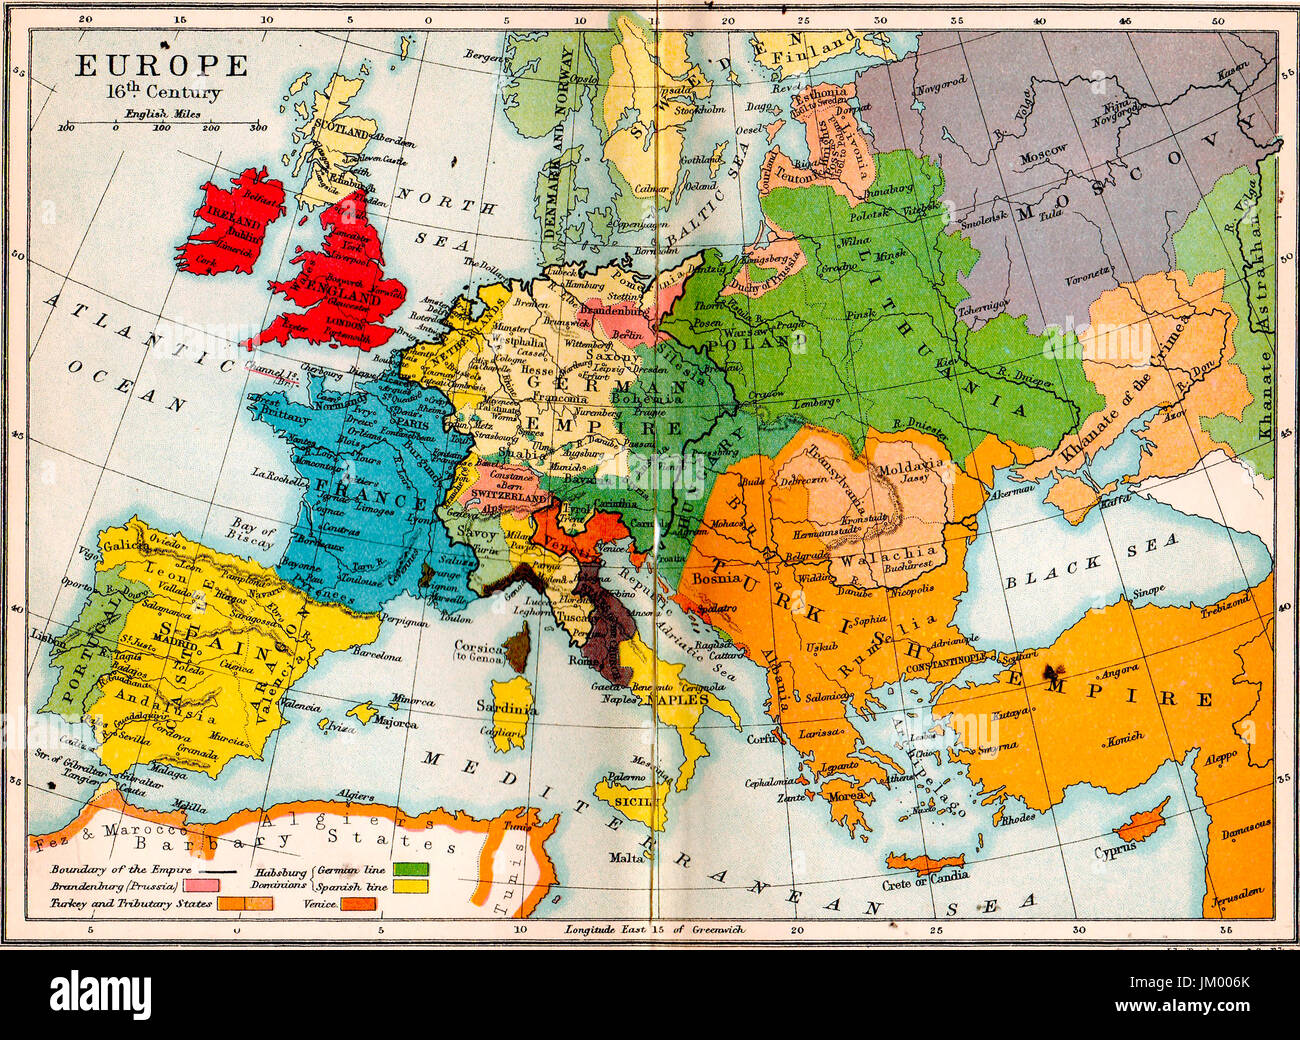 ancienne-ecole-carte-atlas-l-europe-au-16eme-siecle-jm006k.jpg